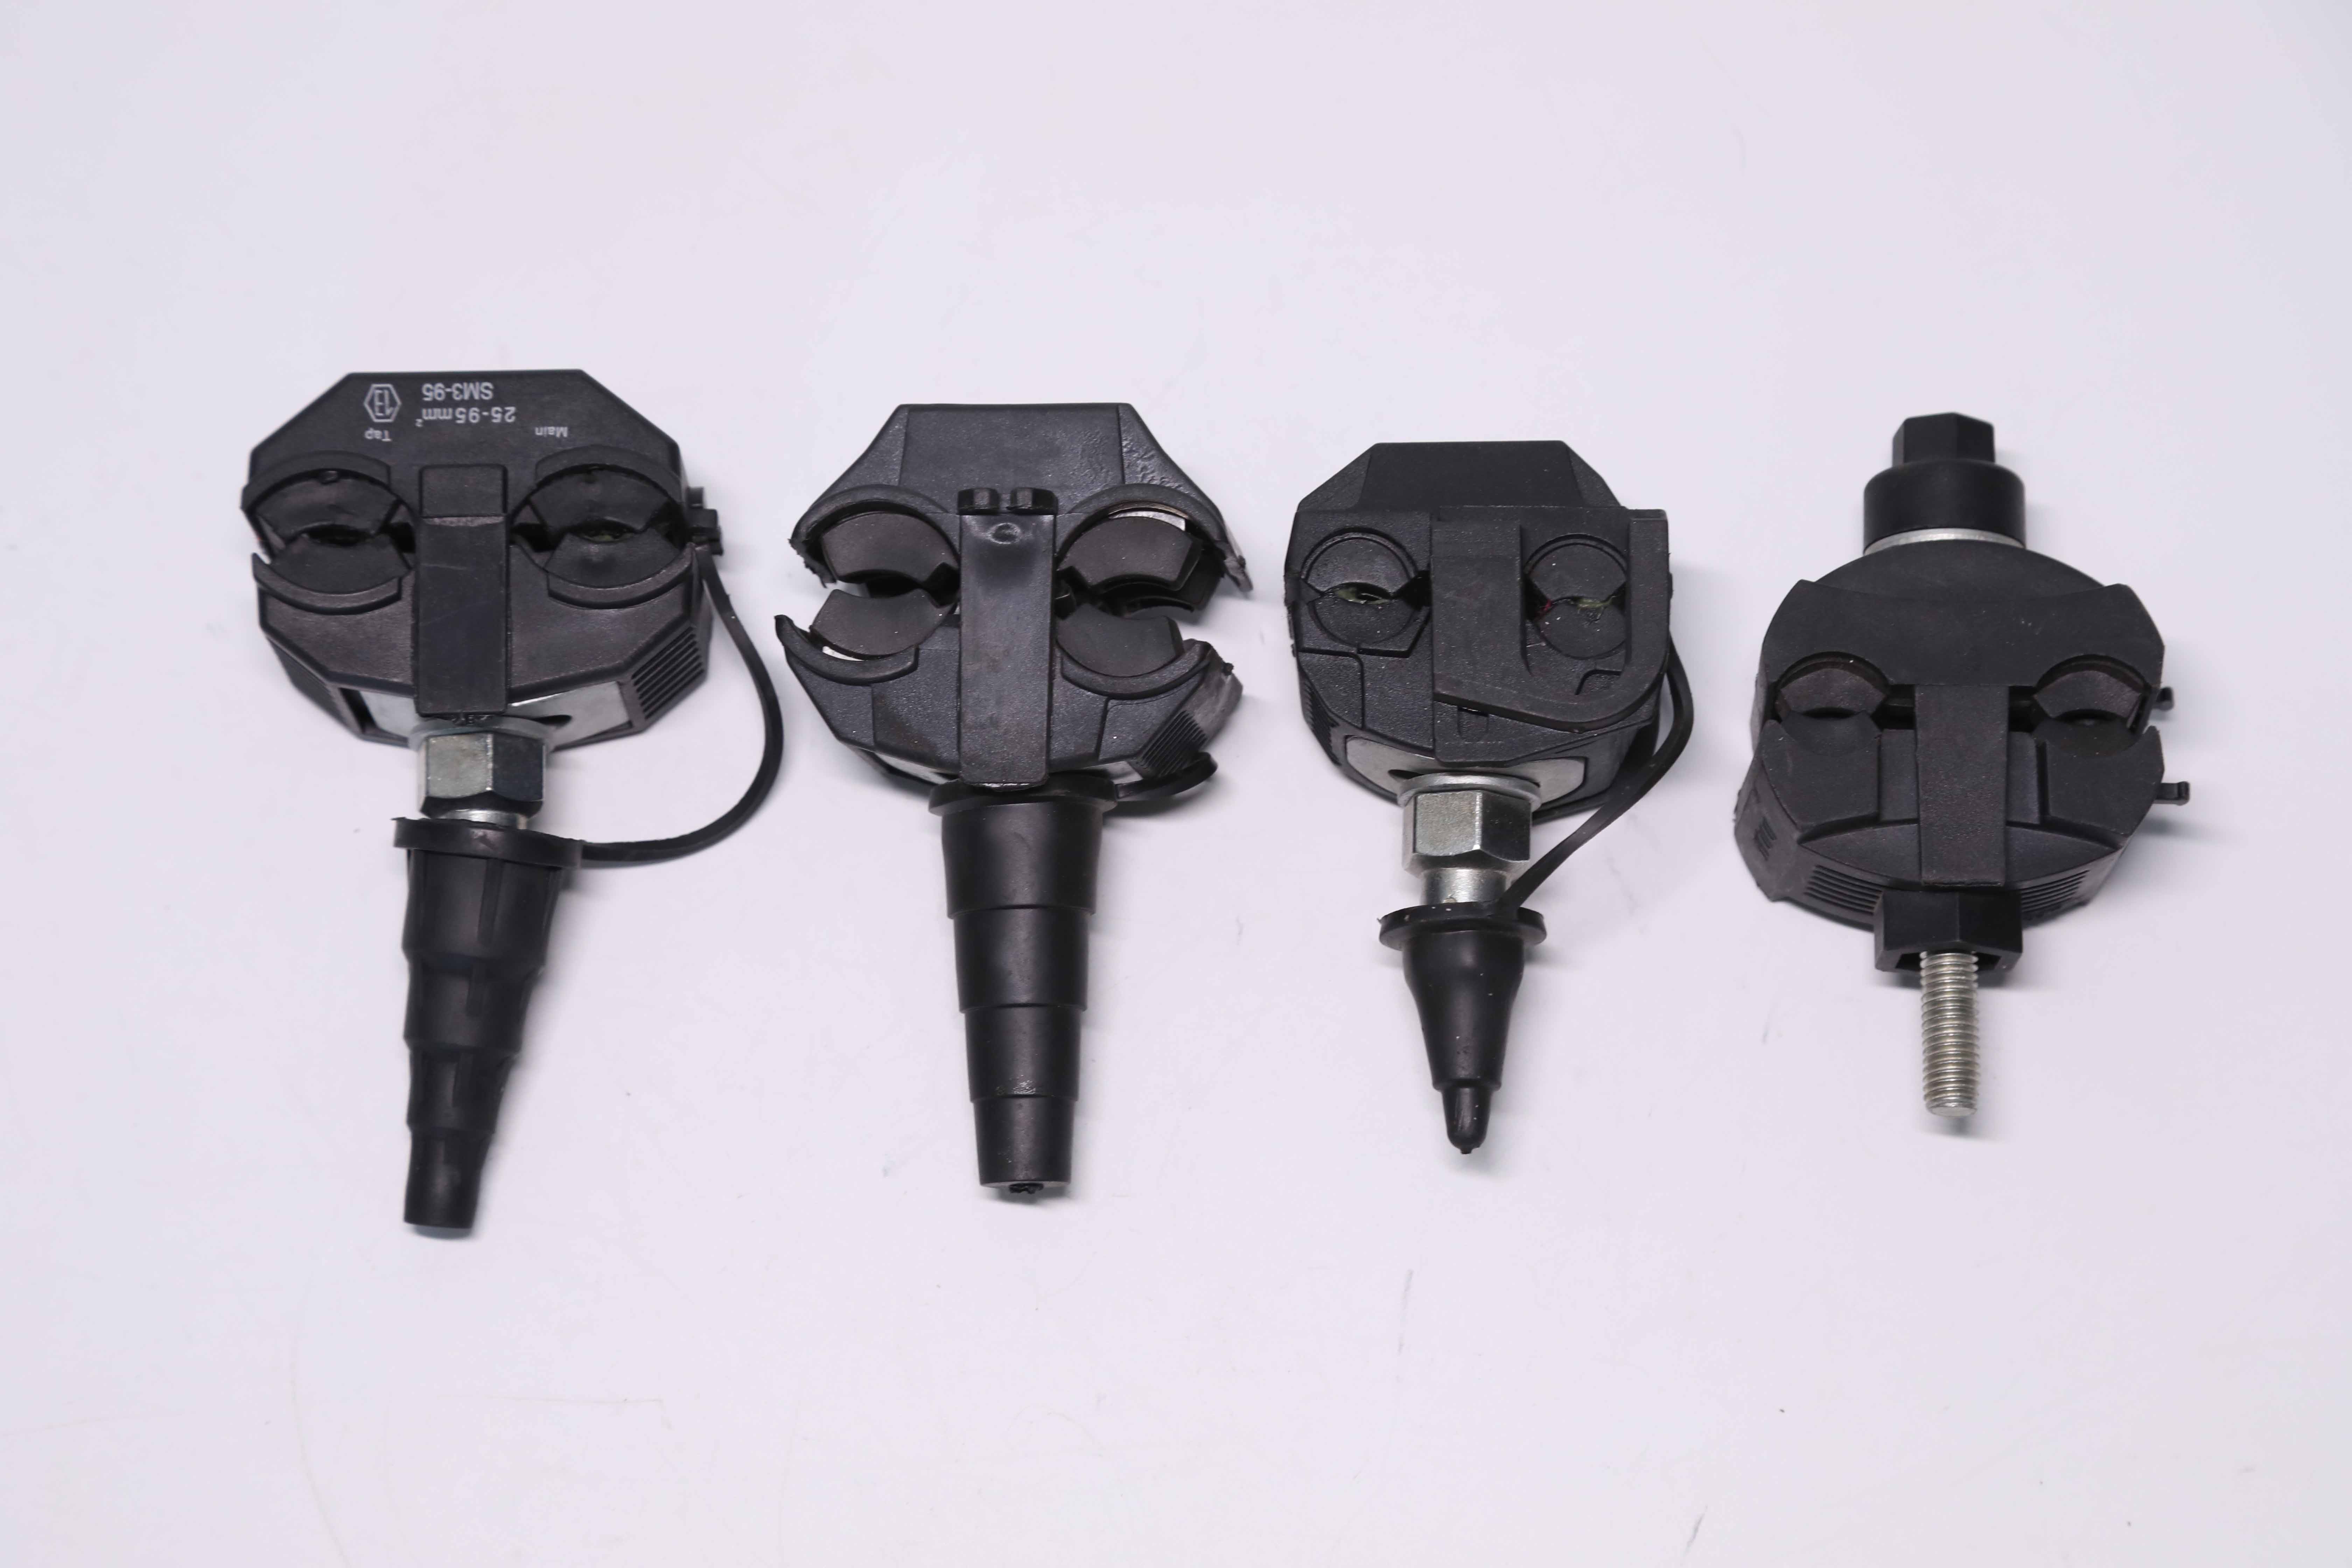 OEM Low Voltage Insulation Piercing Connectors